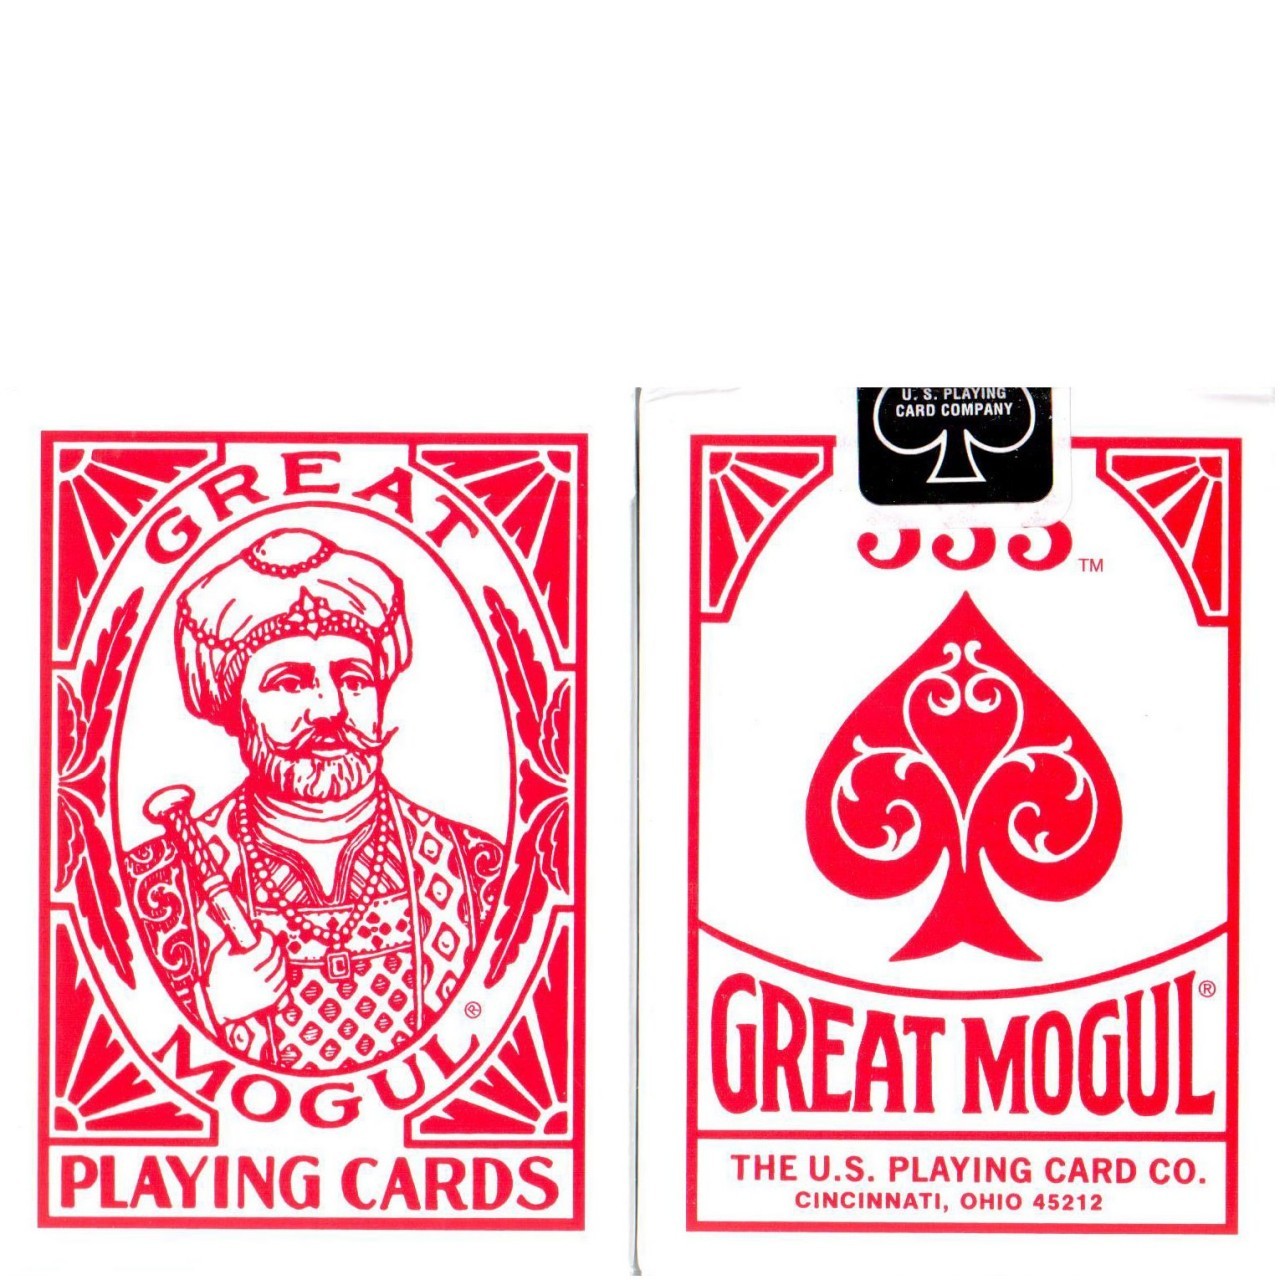 GREAT MOGUL PLAYING CARDS set